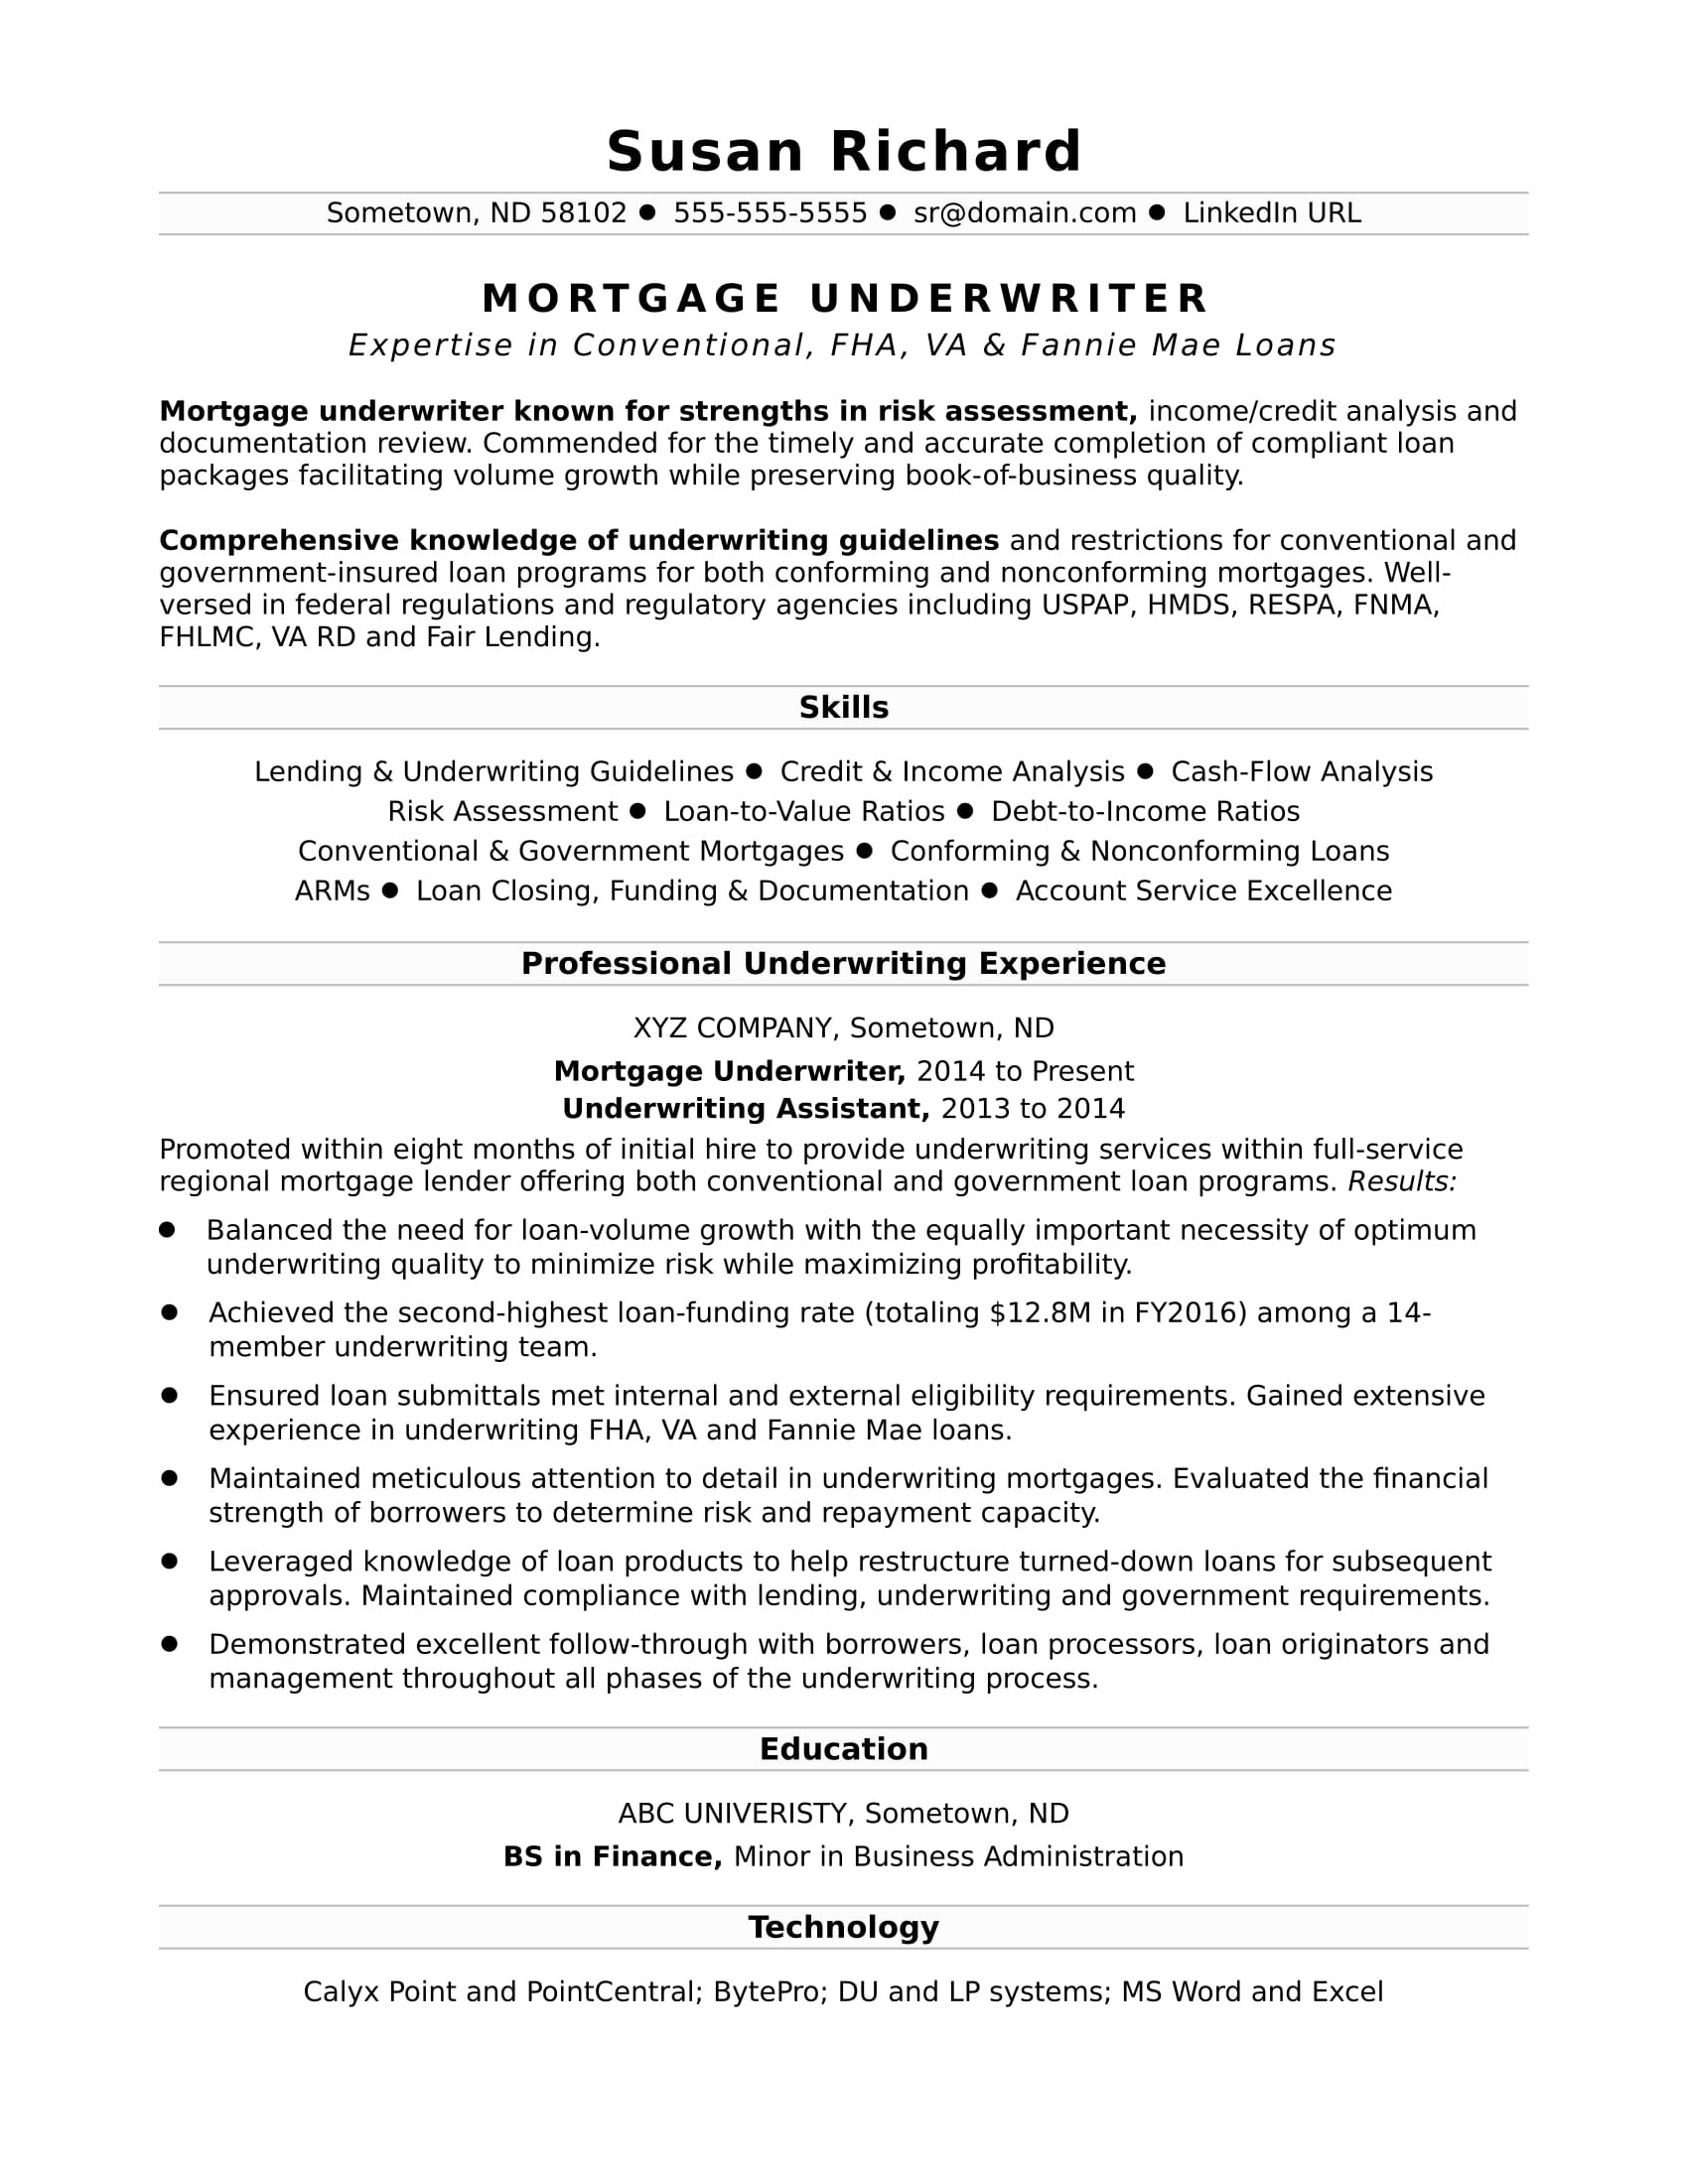 Sample Resume for Mortgage Loan originator Mortgage Underwriter Resume Sample Monster.com